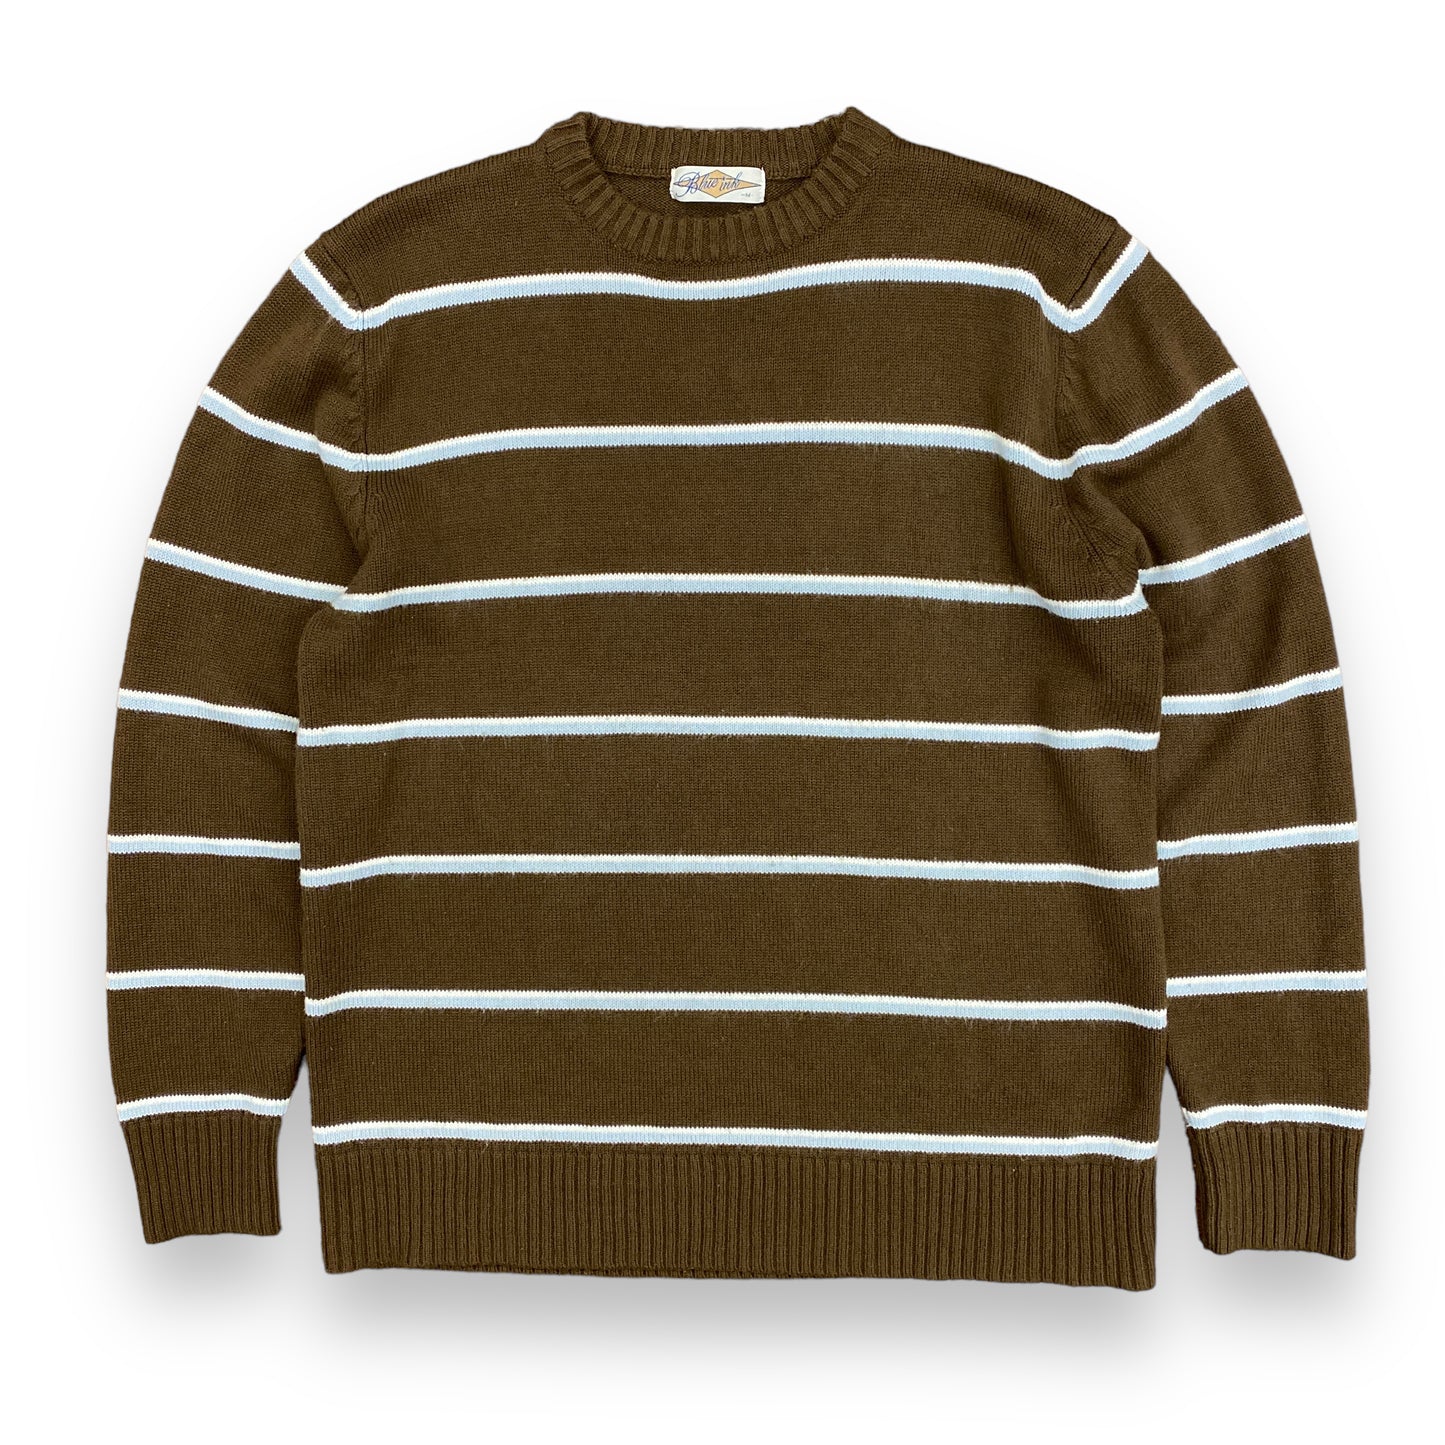 Vintage Brown Striped Sweater - Size Medium